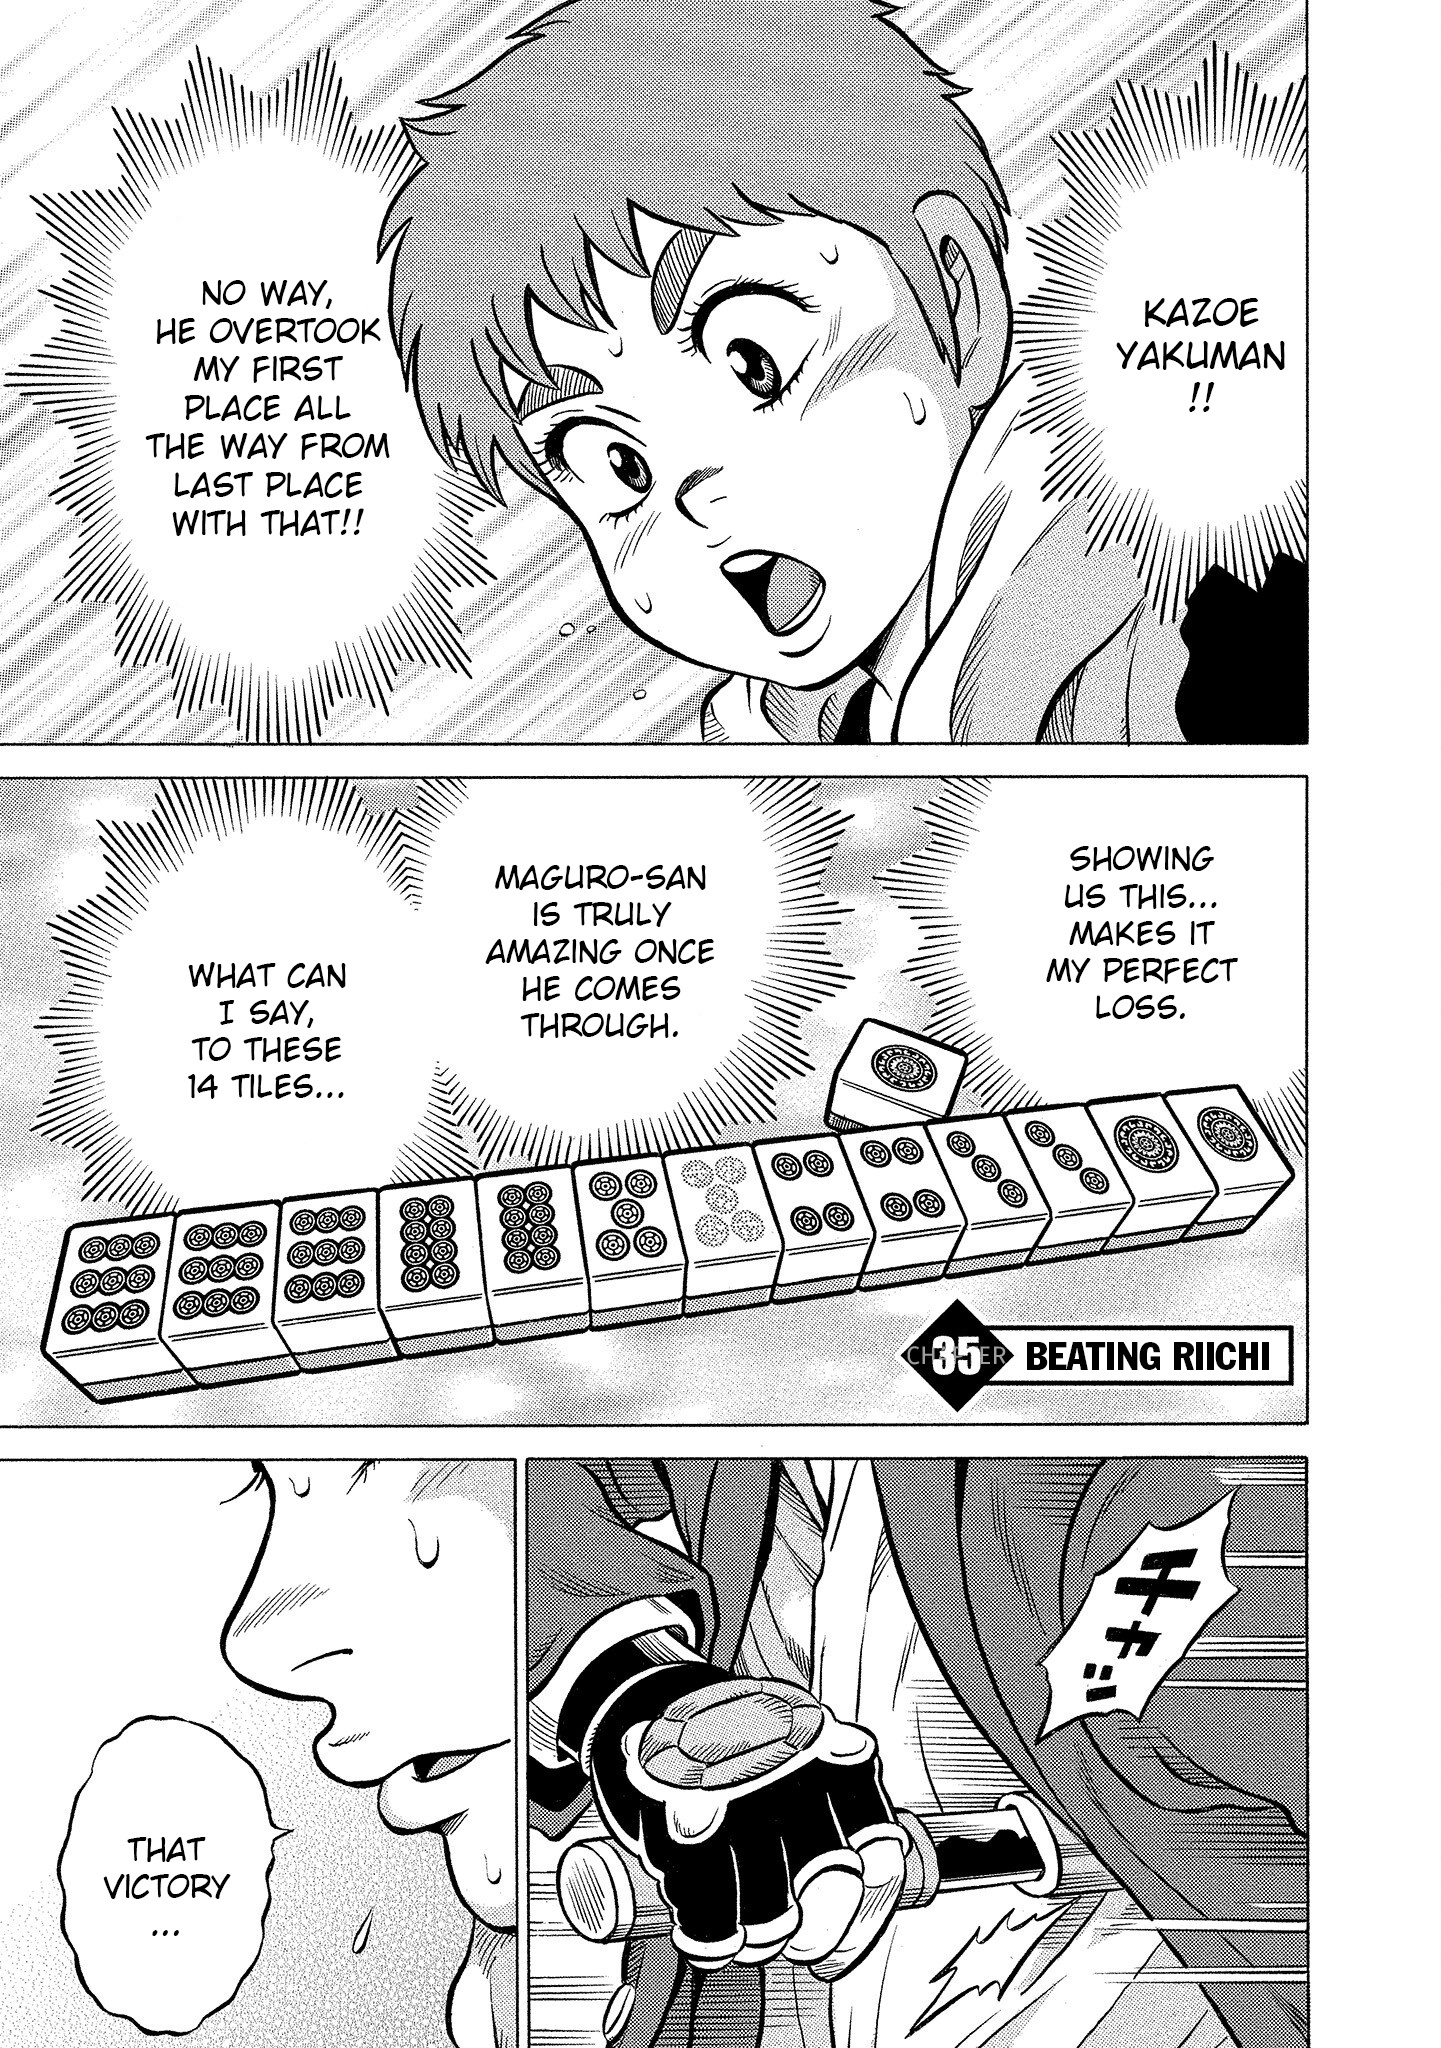 Kirinji Gate Vol.5 Chapter 35: Beating Riichi - Picture 1